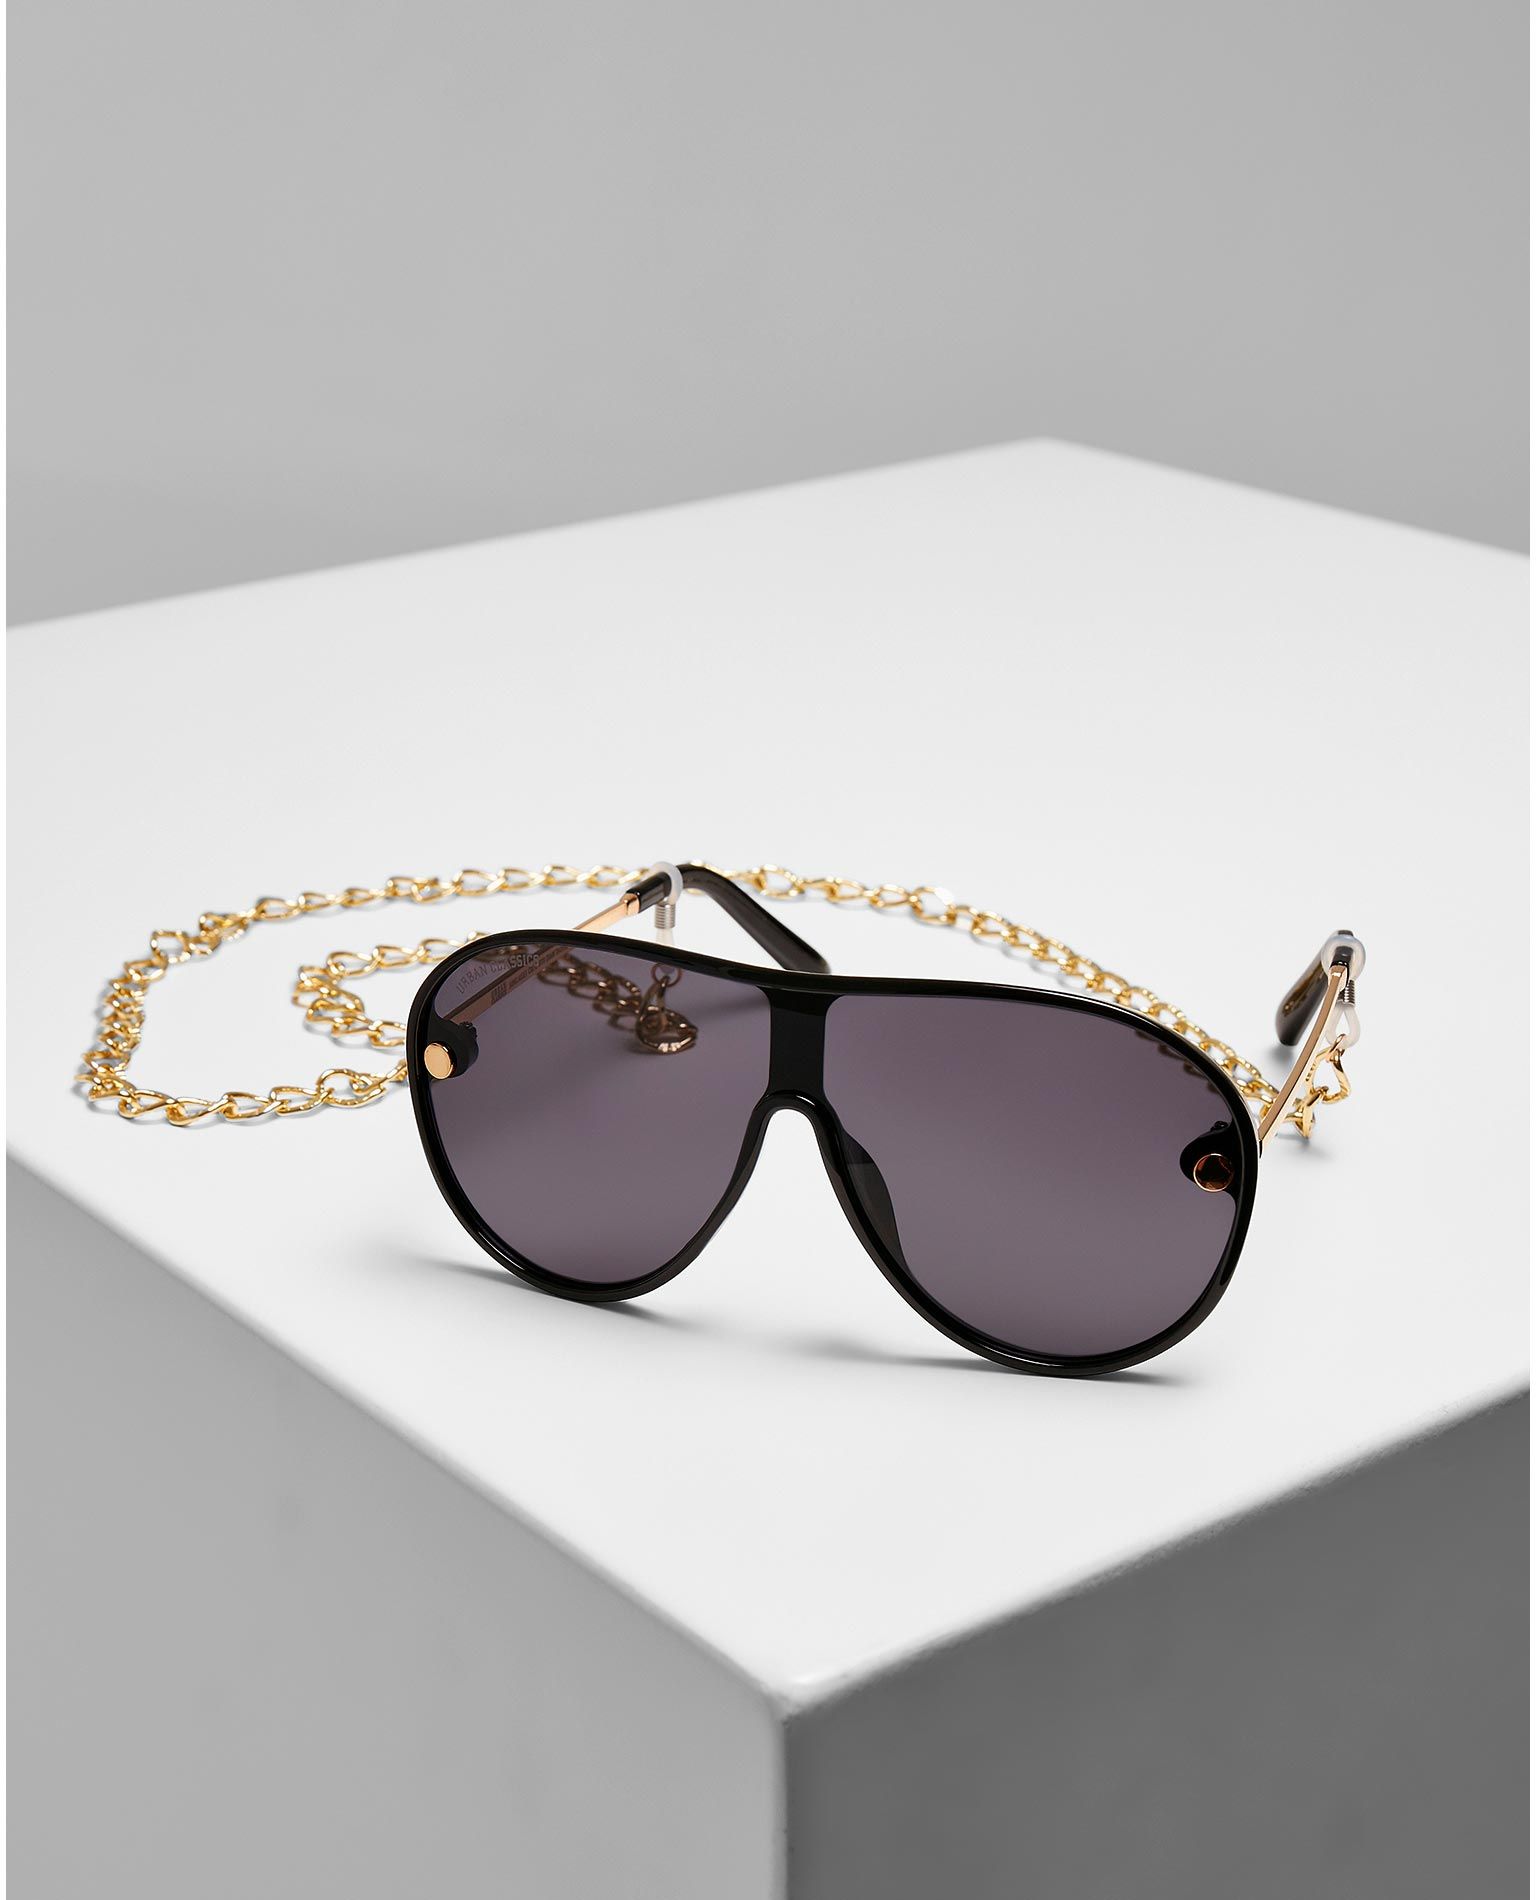 Naxos With Chain Urban Classics Sunglasses